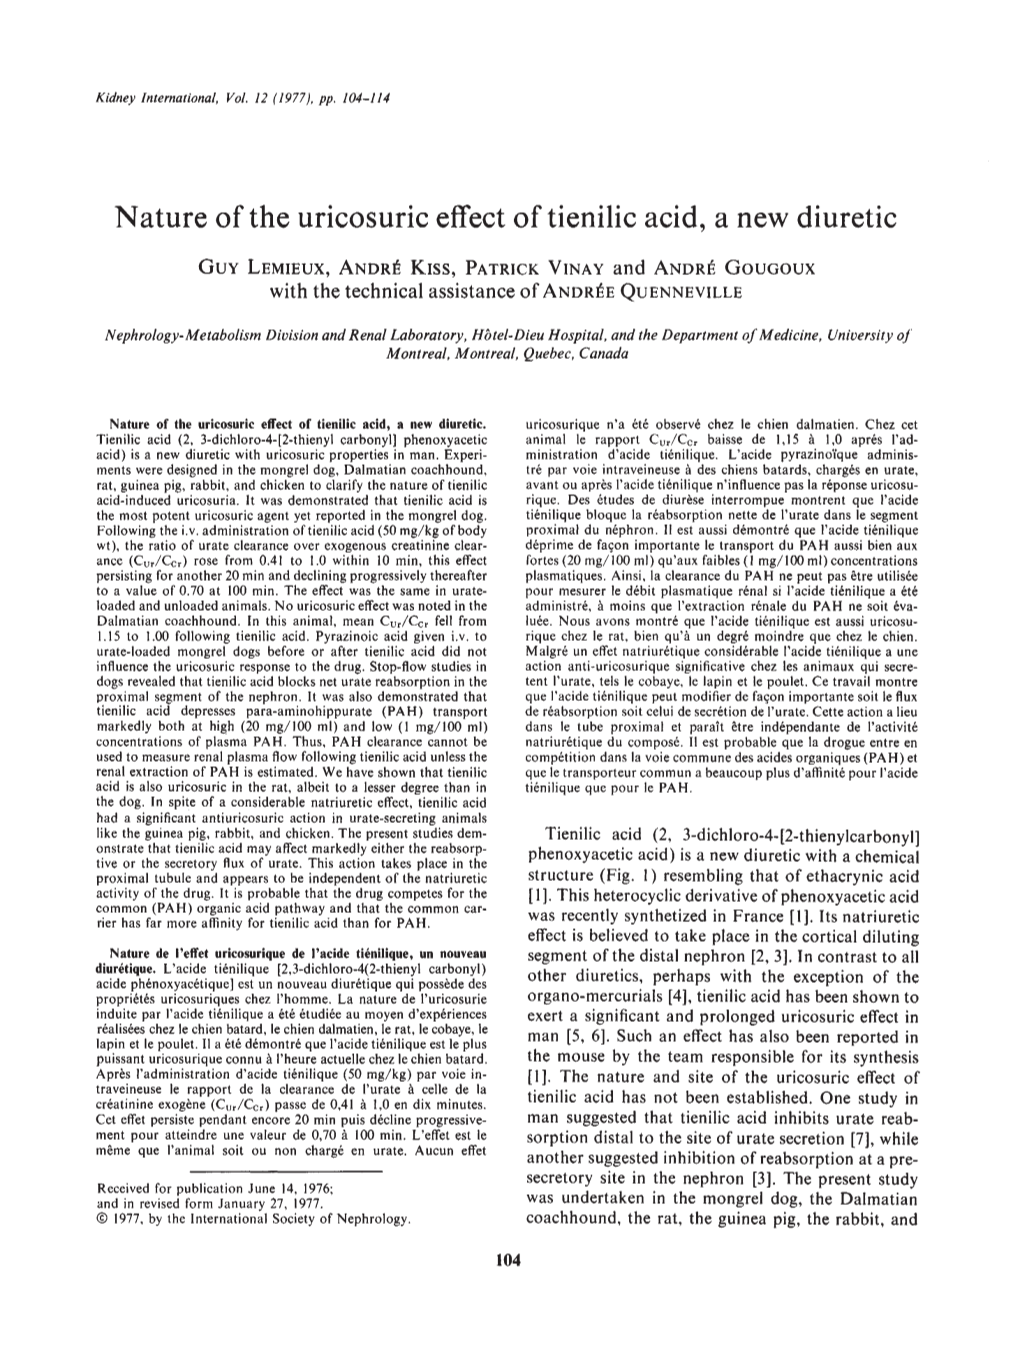 Nature of the Uricosuric Effect of Tienilic Acid, a New Diuretic